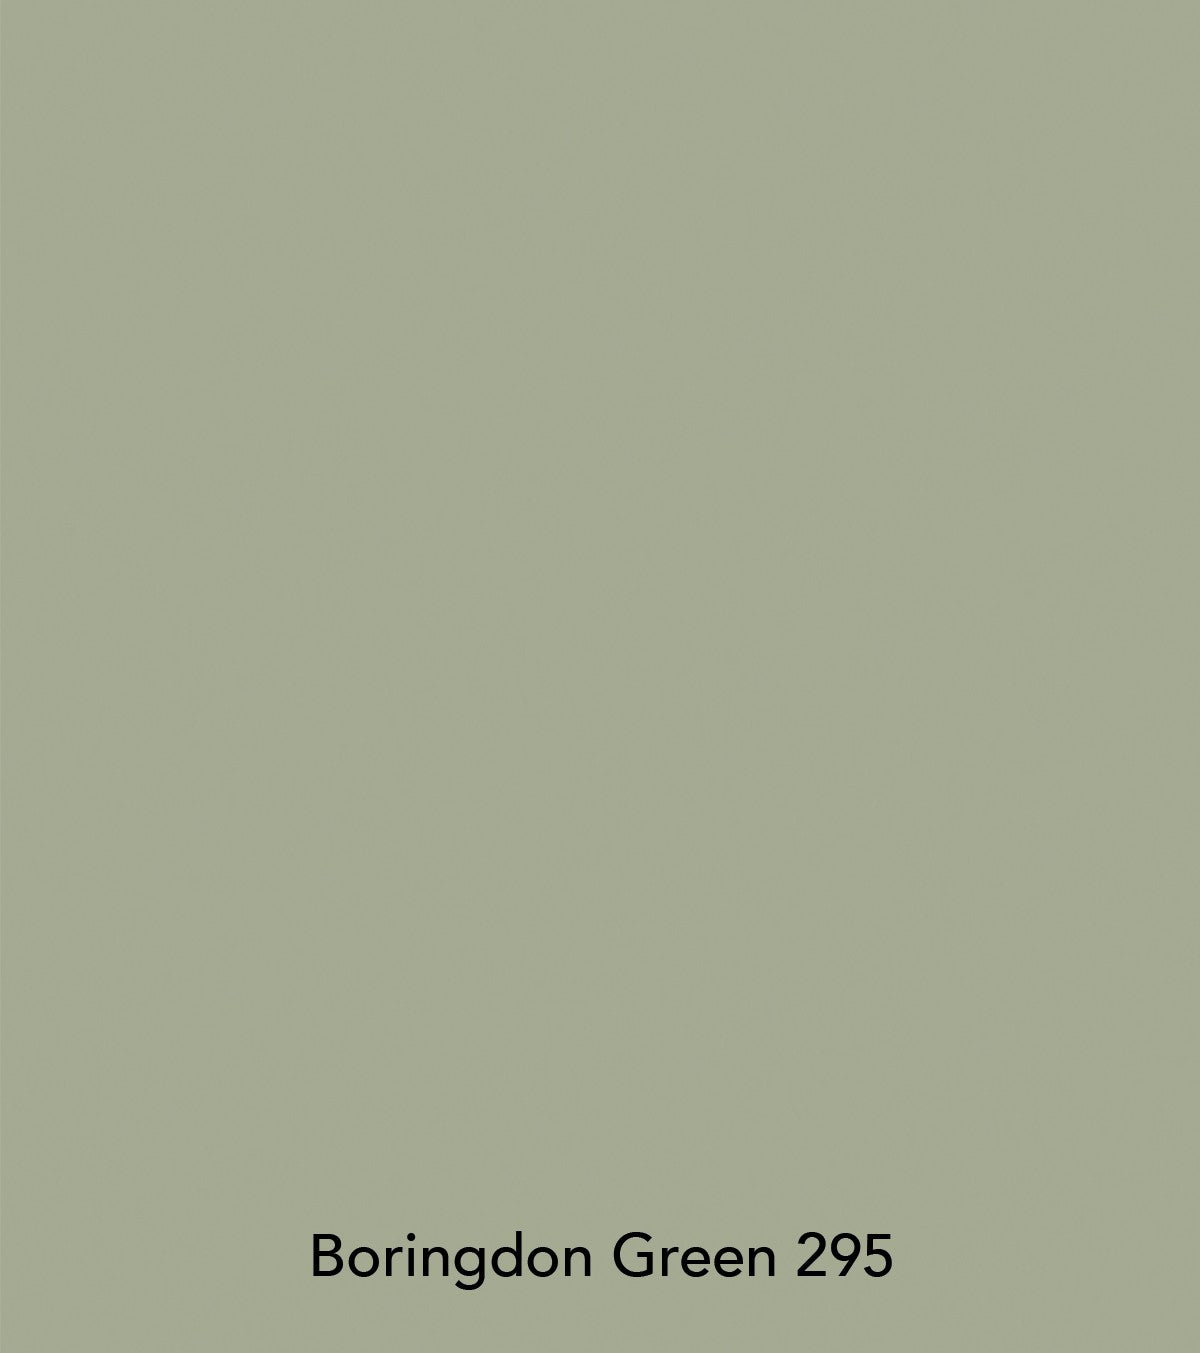 Pintura Little Greene - Boringdon Green (295)